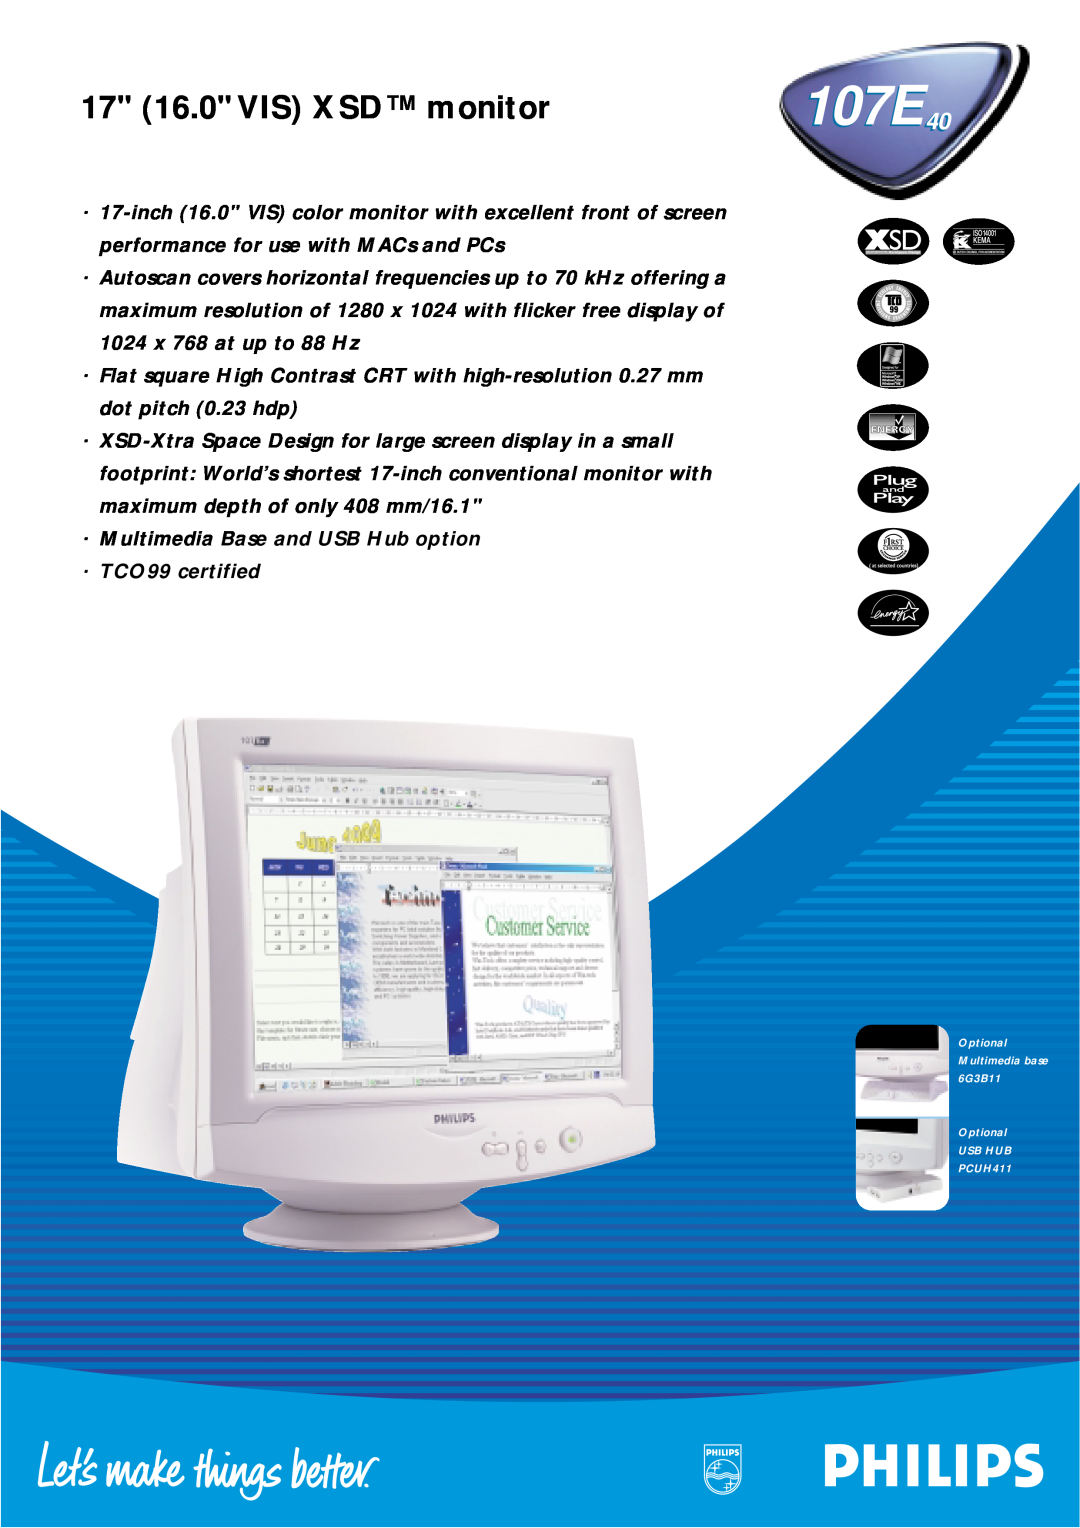 Philips 107E40 manual 17 16.0 VIS XSD monitor 